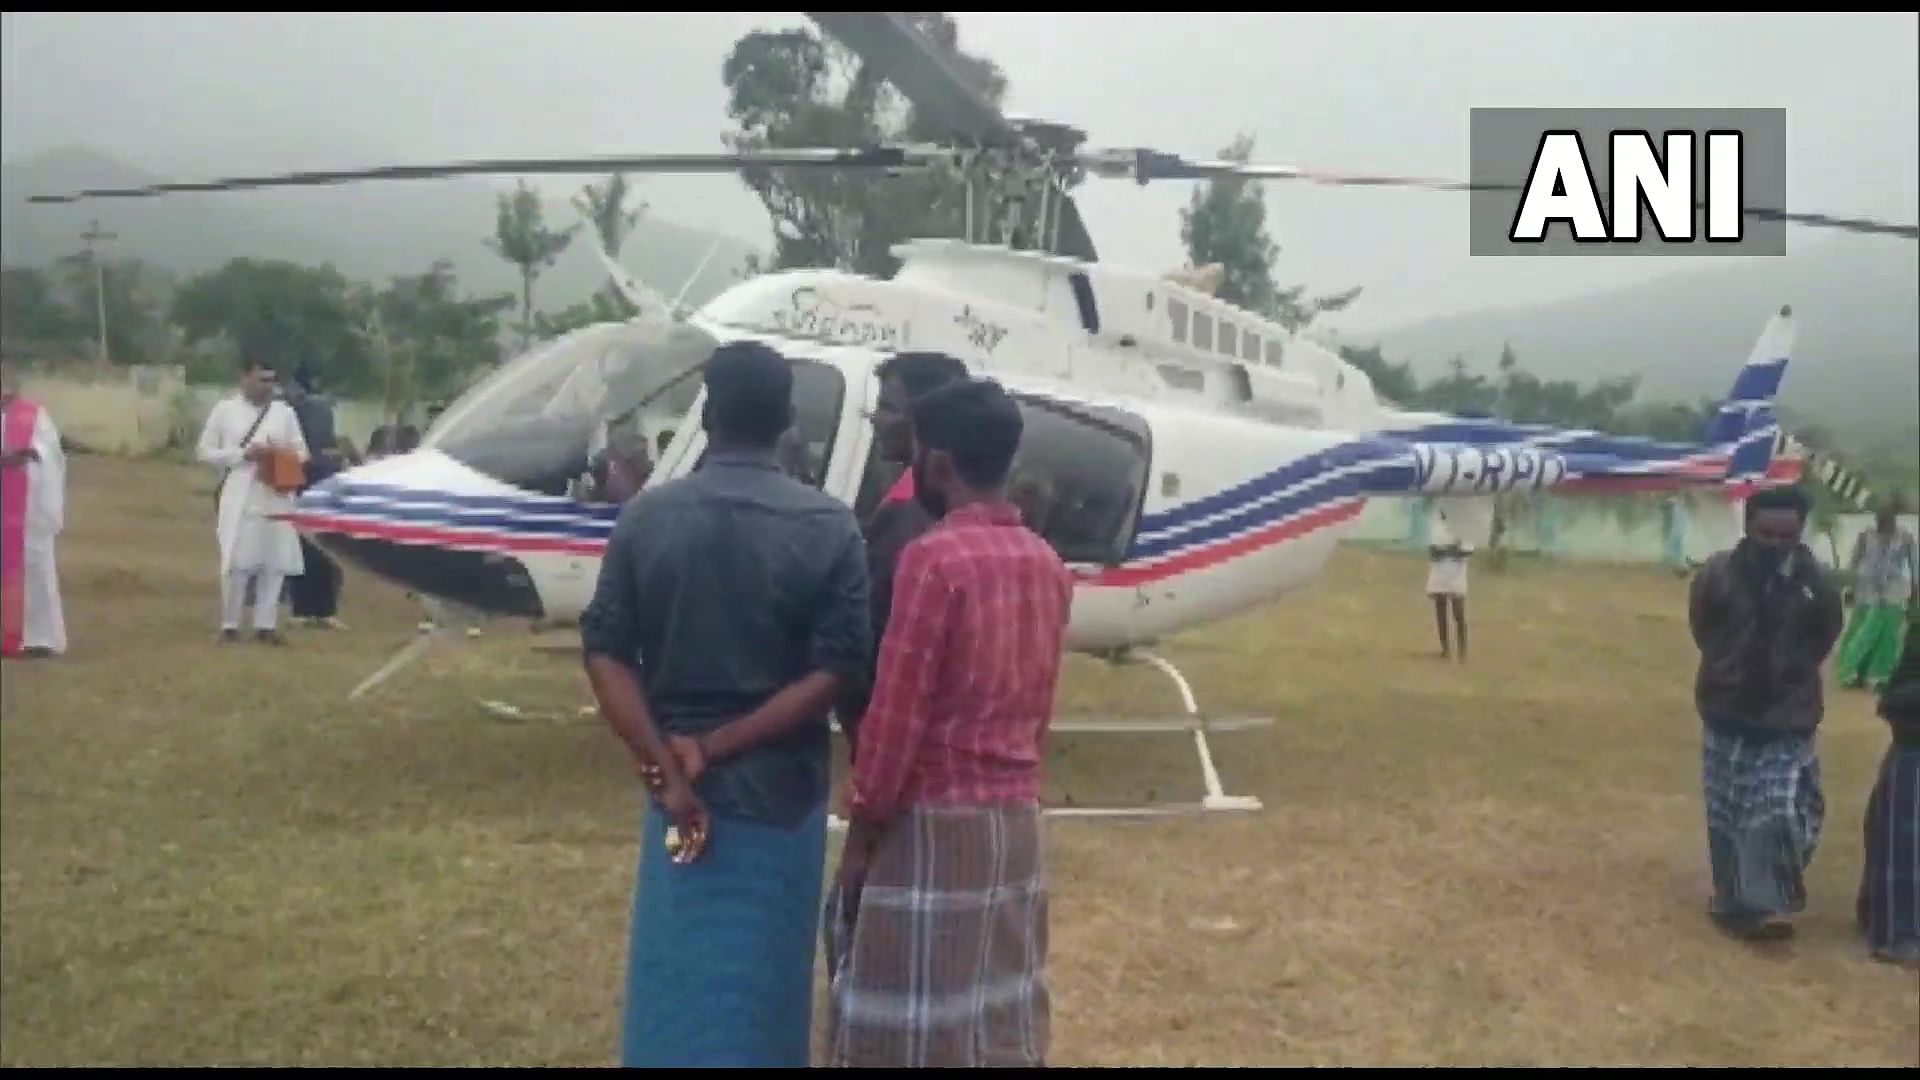 Police said Sri Sri Ravishankar and 3 of his staff members were the passengers. Credit: Twitter/@ANI